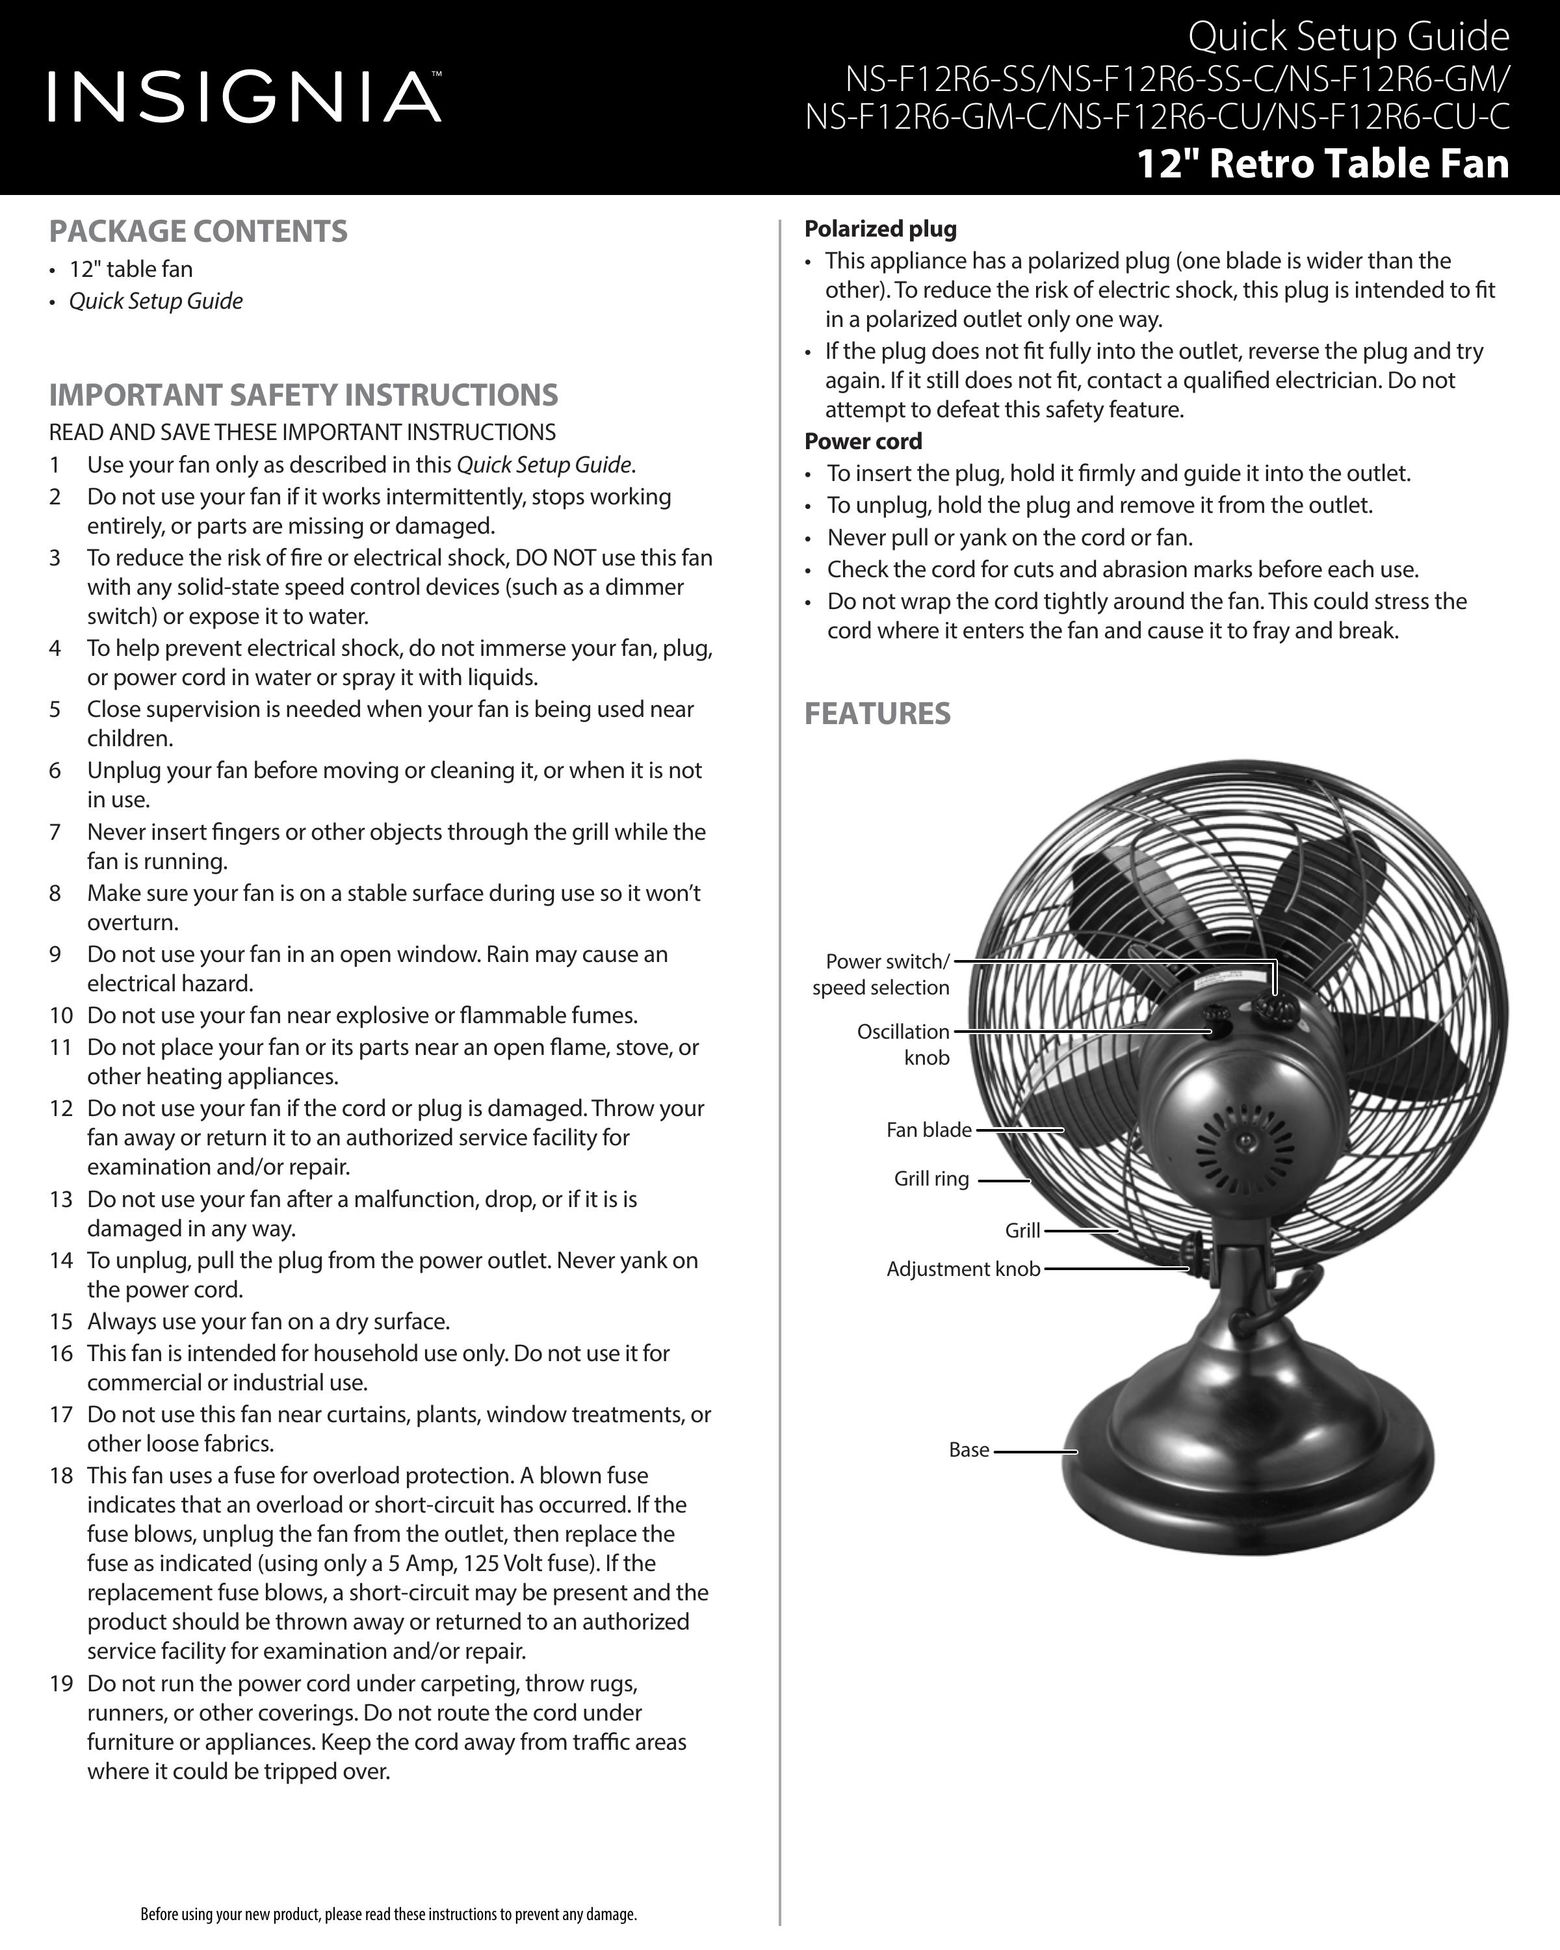 Insignia NS-F12R6-CU Fan User Manual